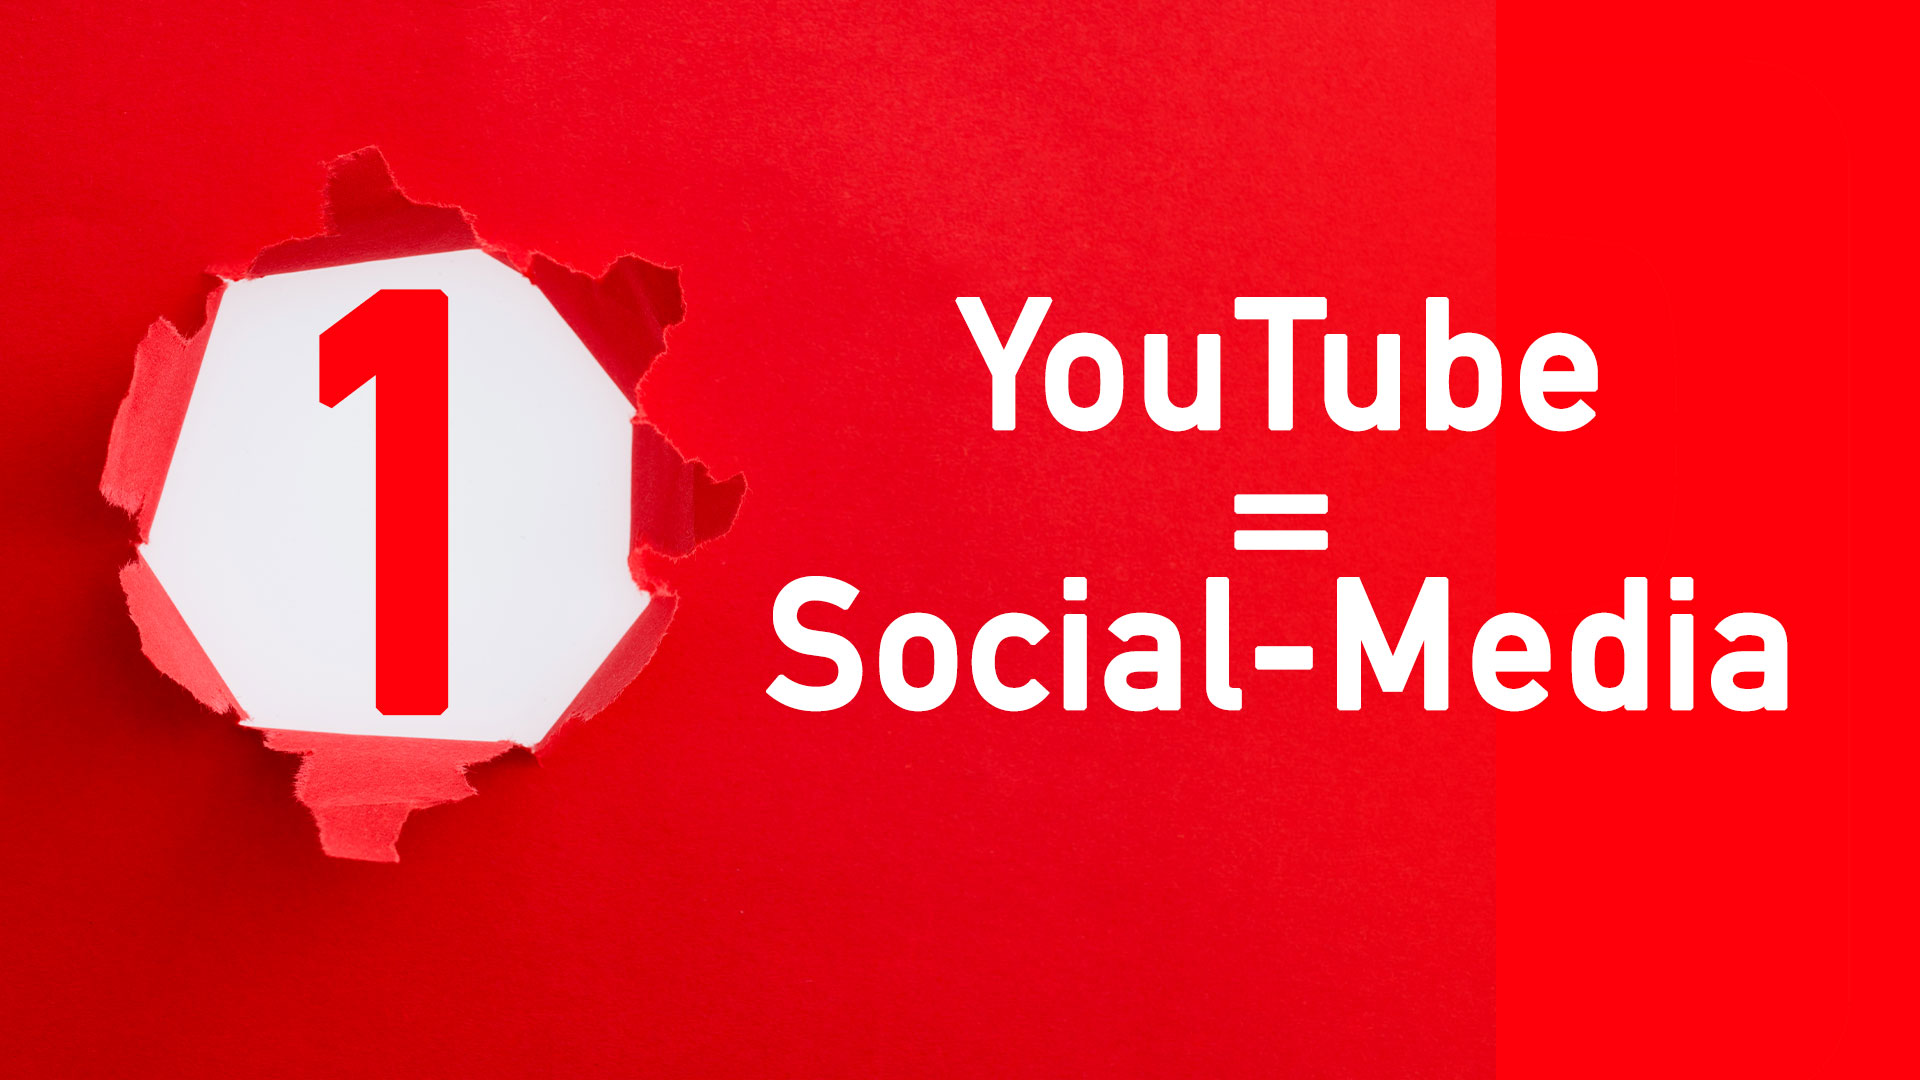 YouTube Videostrategie 1: YouTube = Social Media.